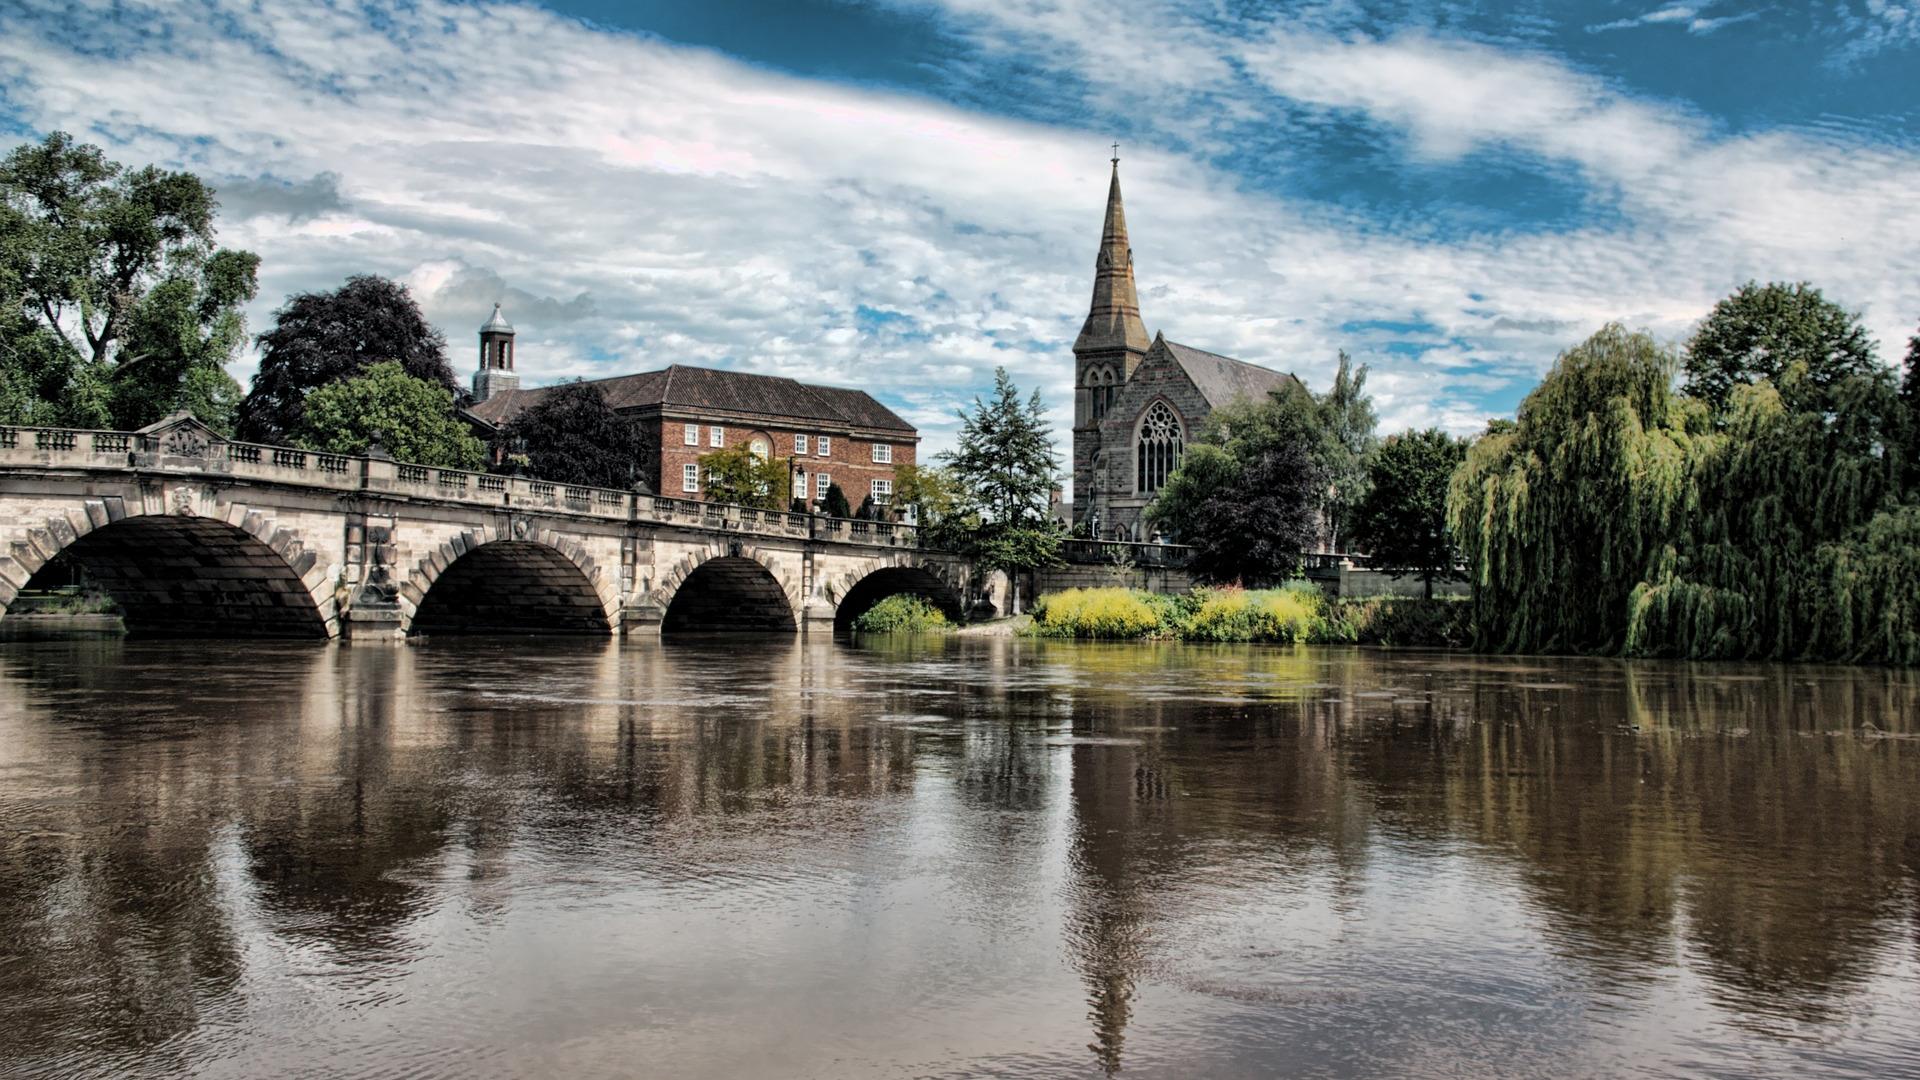 Shrewsbury. Image by InspiredImages from Pixabay